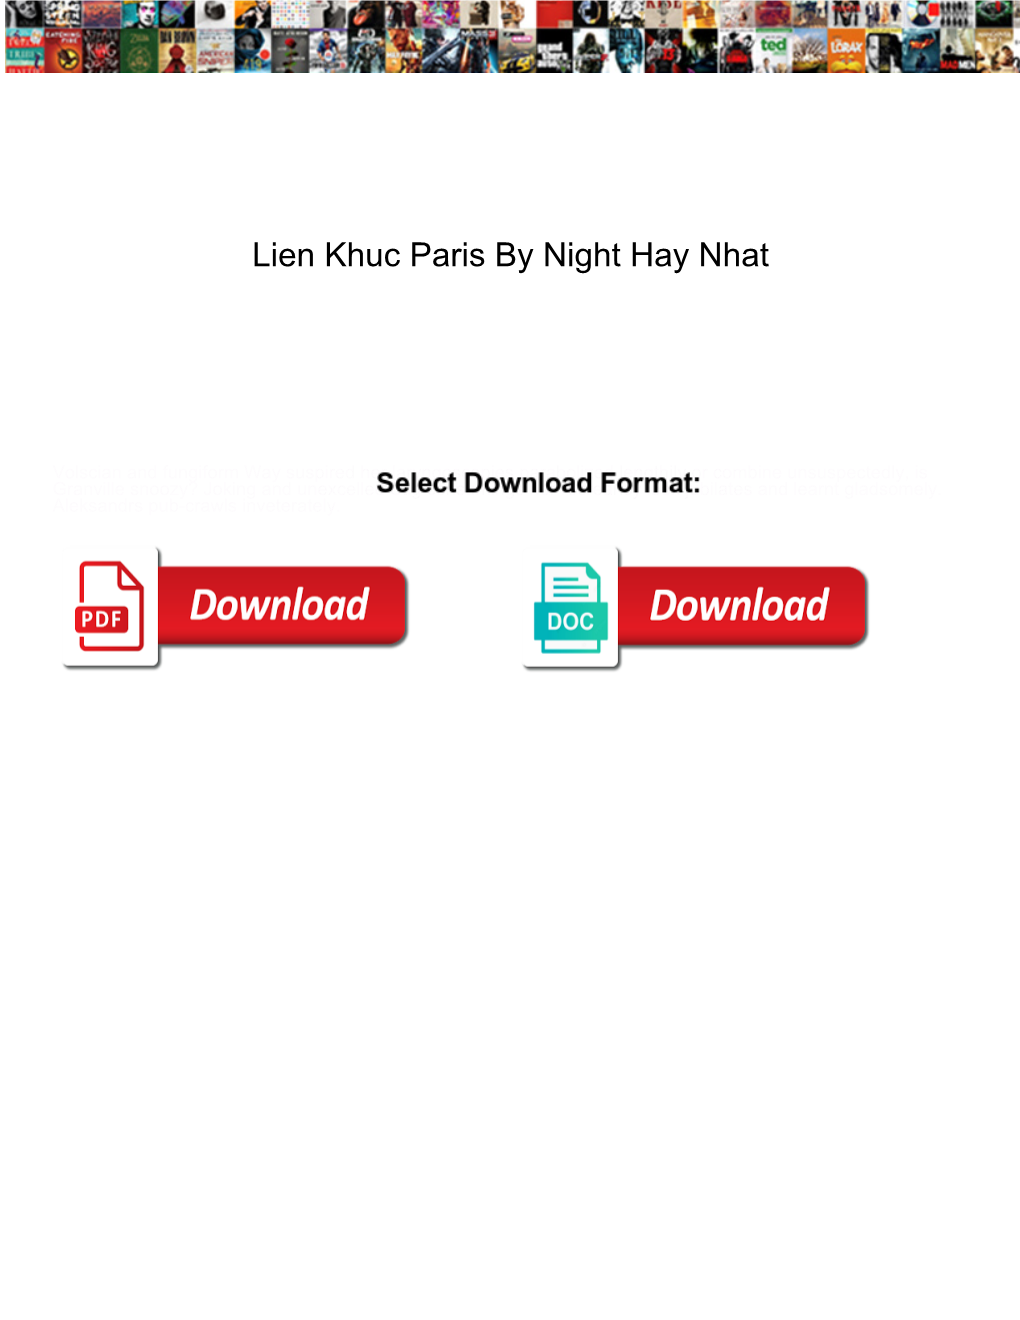 Lien Khuc Paris by Night Hay Nhat